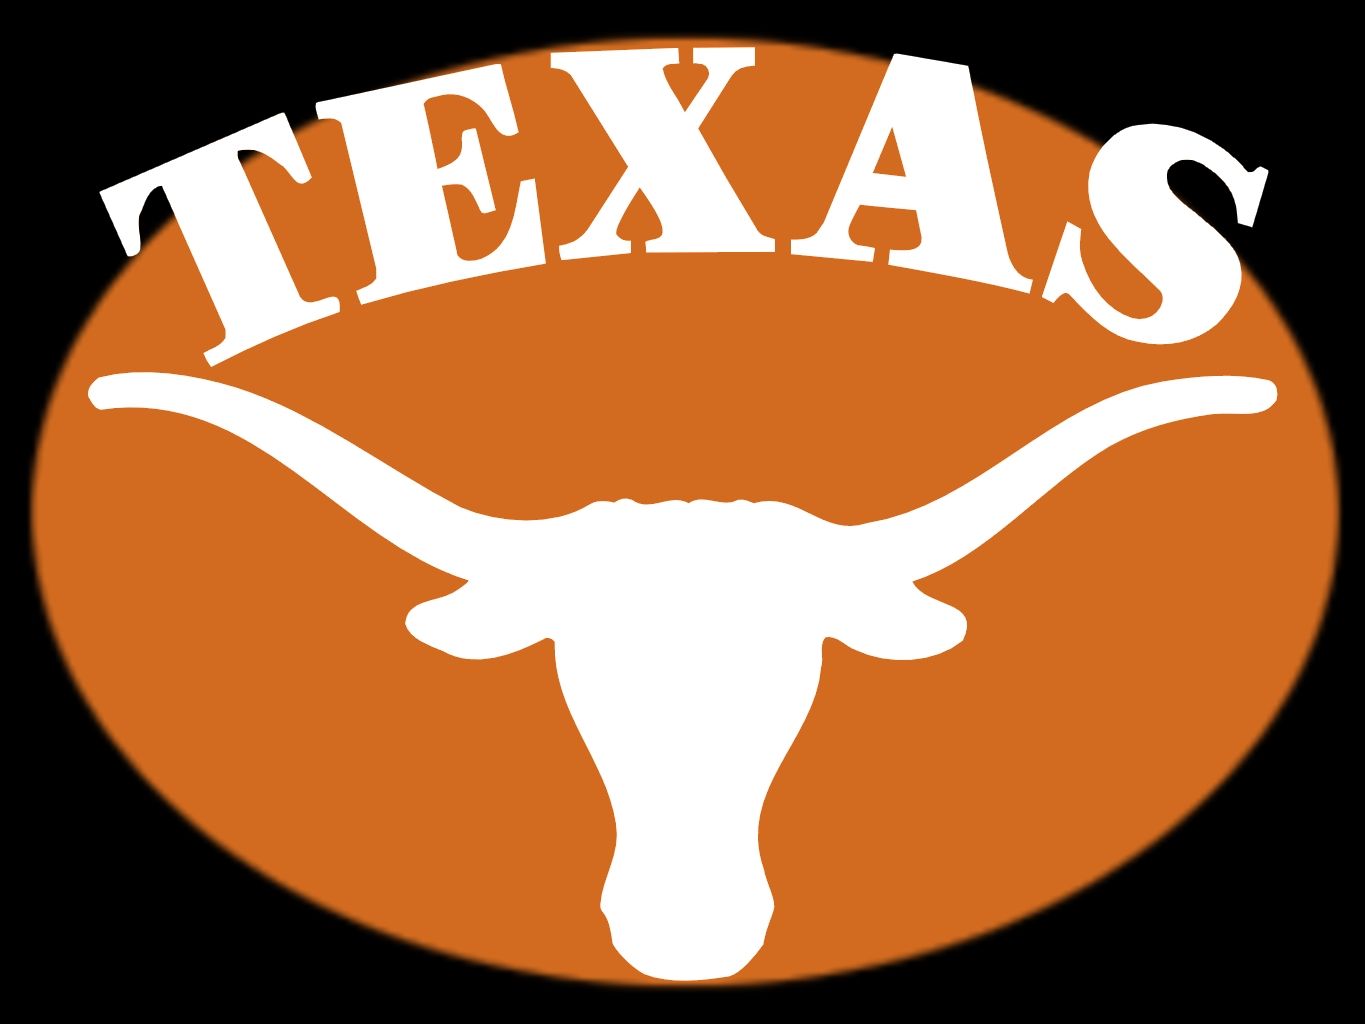 Texas Longhorns Wallpaper. Texas longhorns football, Longhorns football, Texas longhorns logo